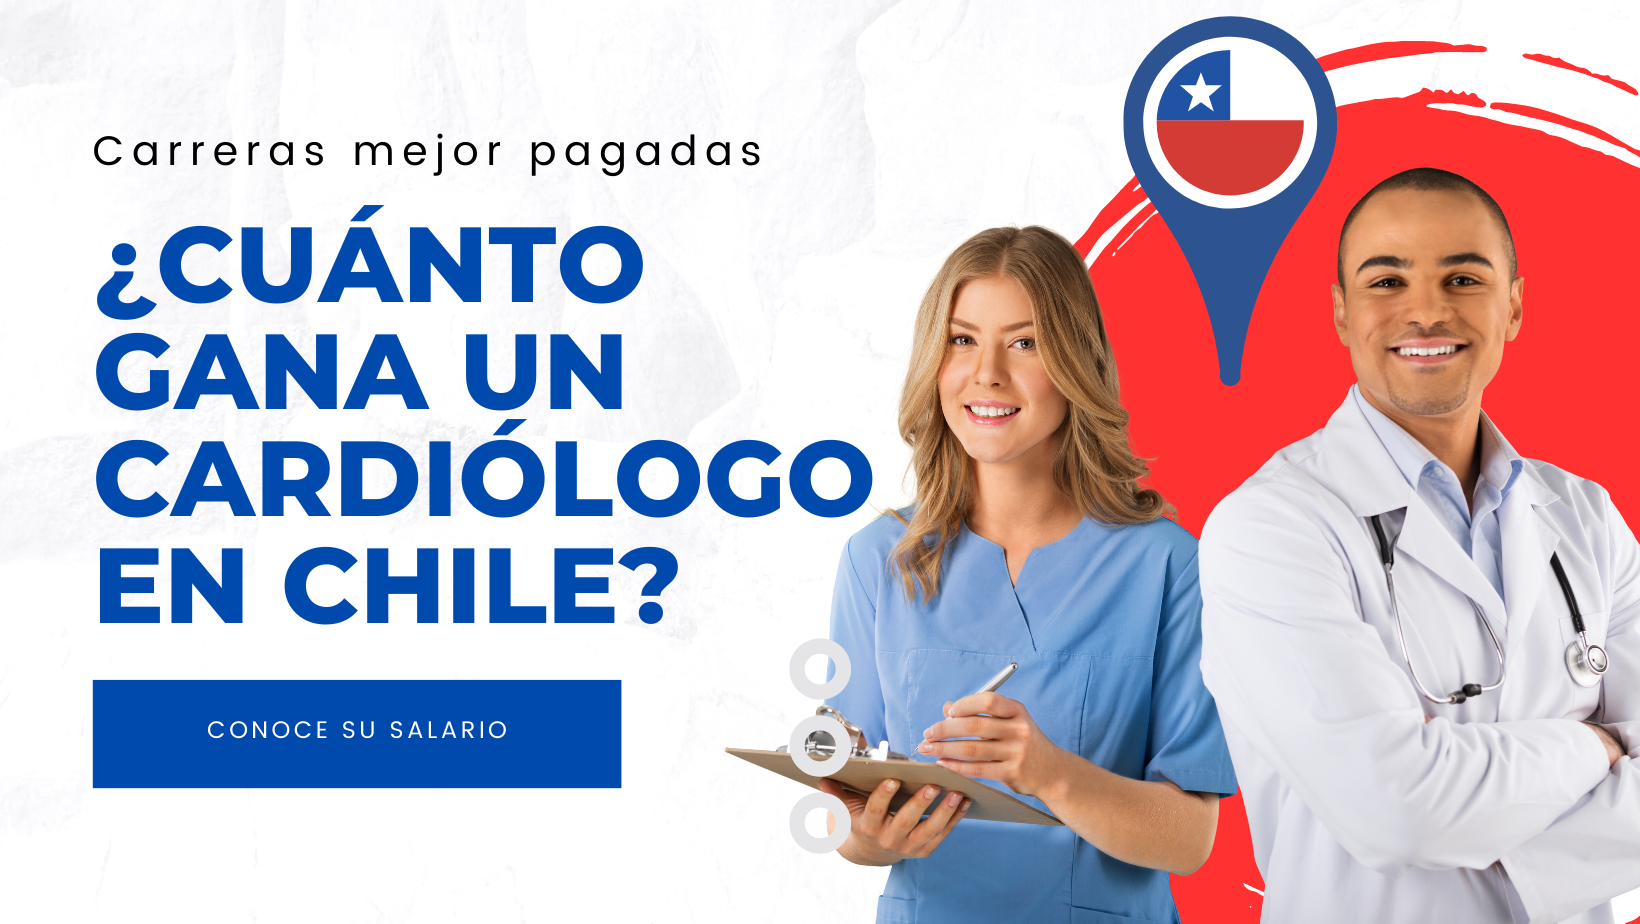 Cuánto gana un cardiólogo en Chile